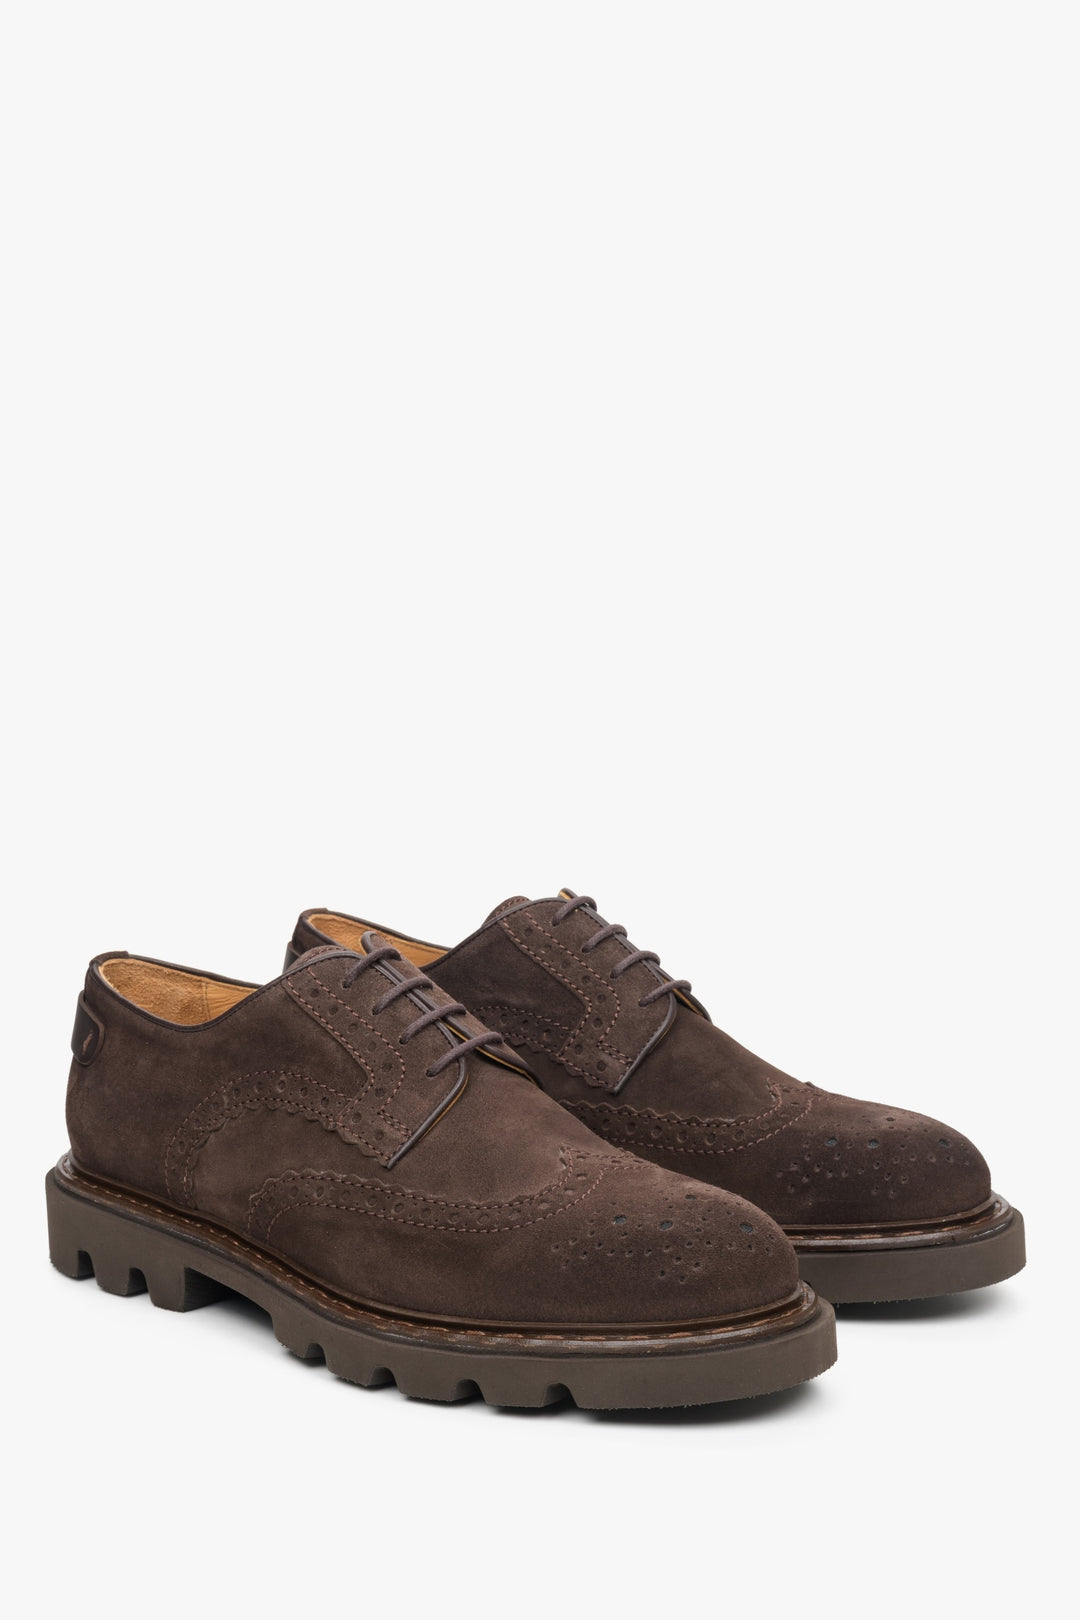 Men's dark brown suede lace-up oxford shoes by Estro.